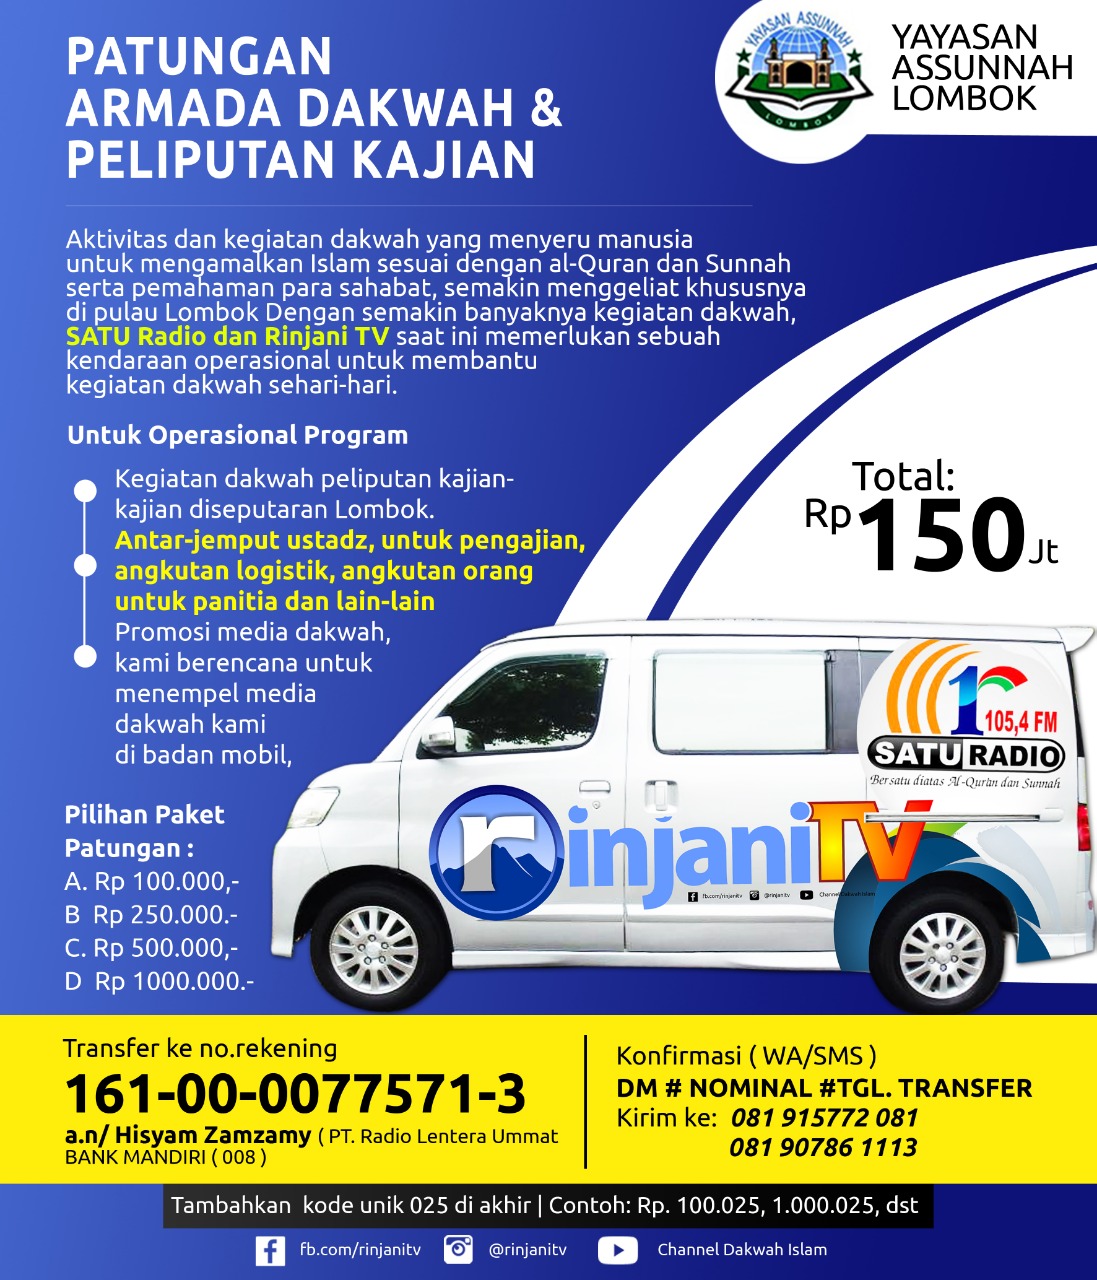 Donasi Mobil Tim Media Dakwah As Sunnah Lombok